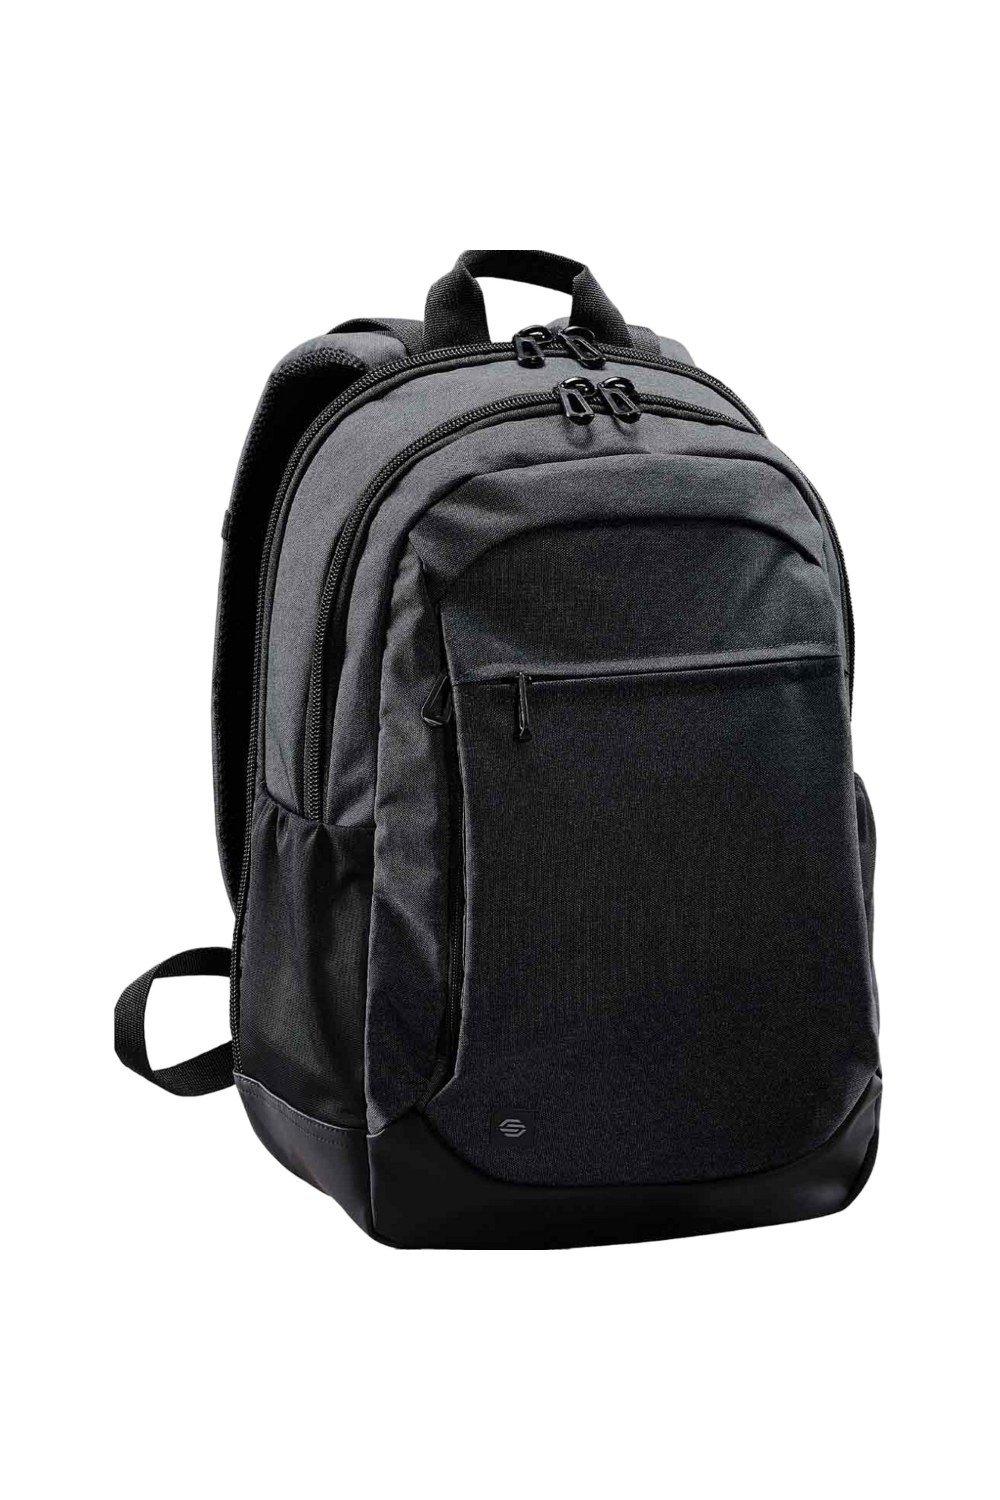 Trinity Access Backpack